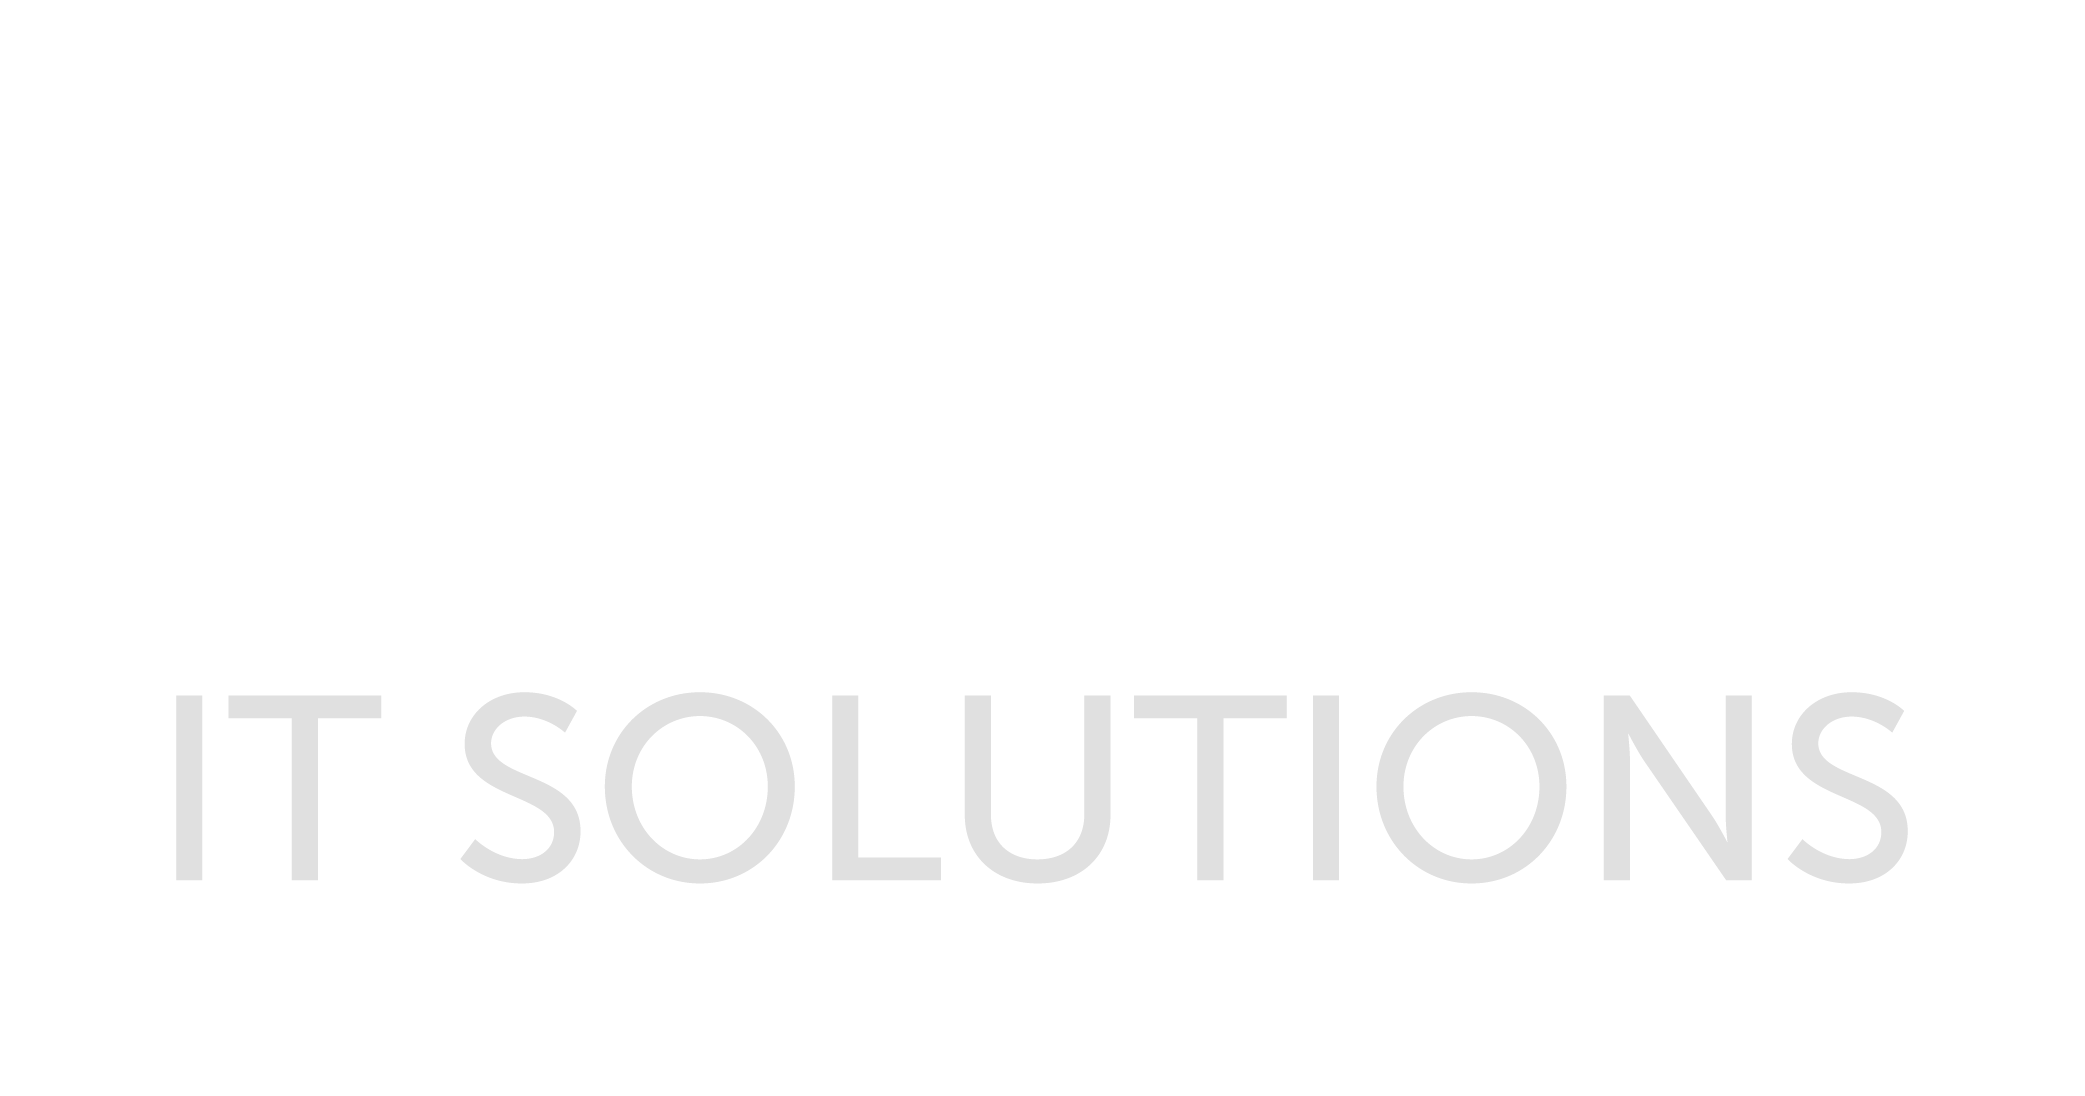 Msb it solutions logo